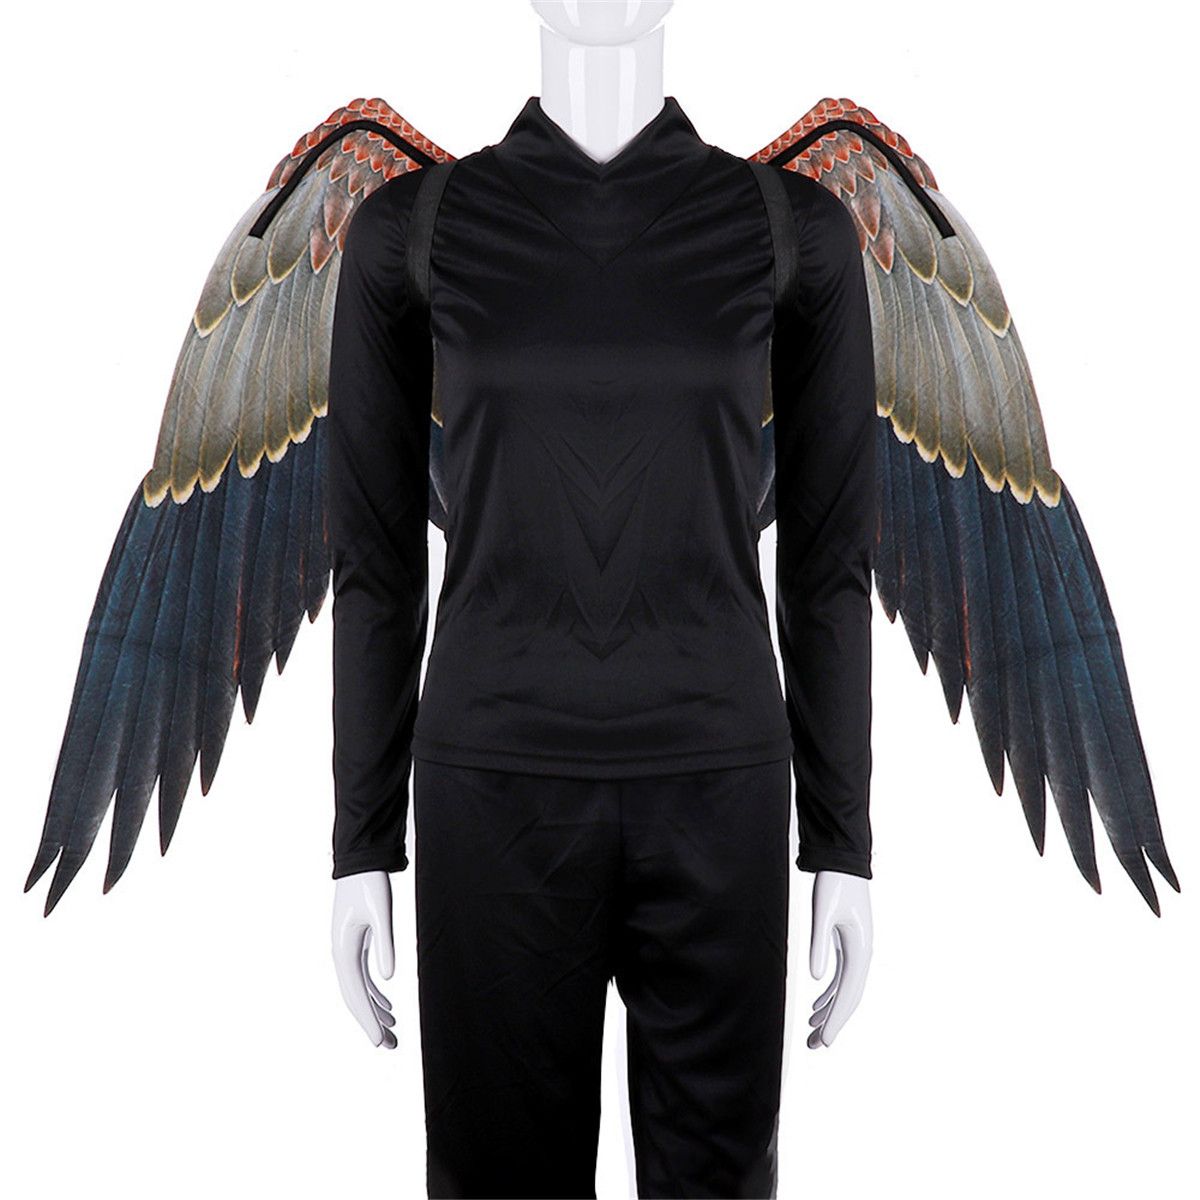 Adult-Japanese-Game-Onmyoji-Cosplay-Tengu-Bird-Carnival-Costume-Large-Big-Wings-1443807